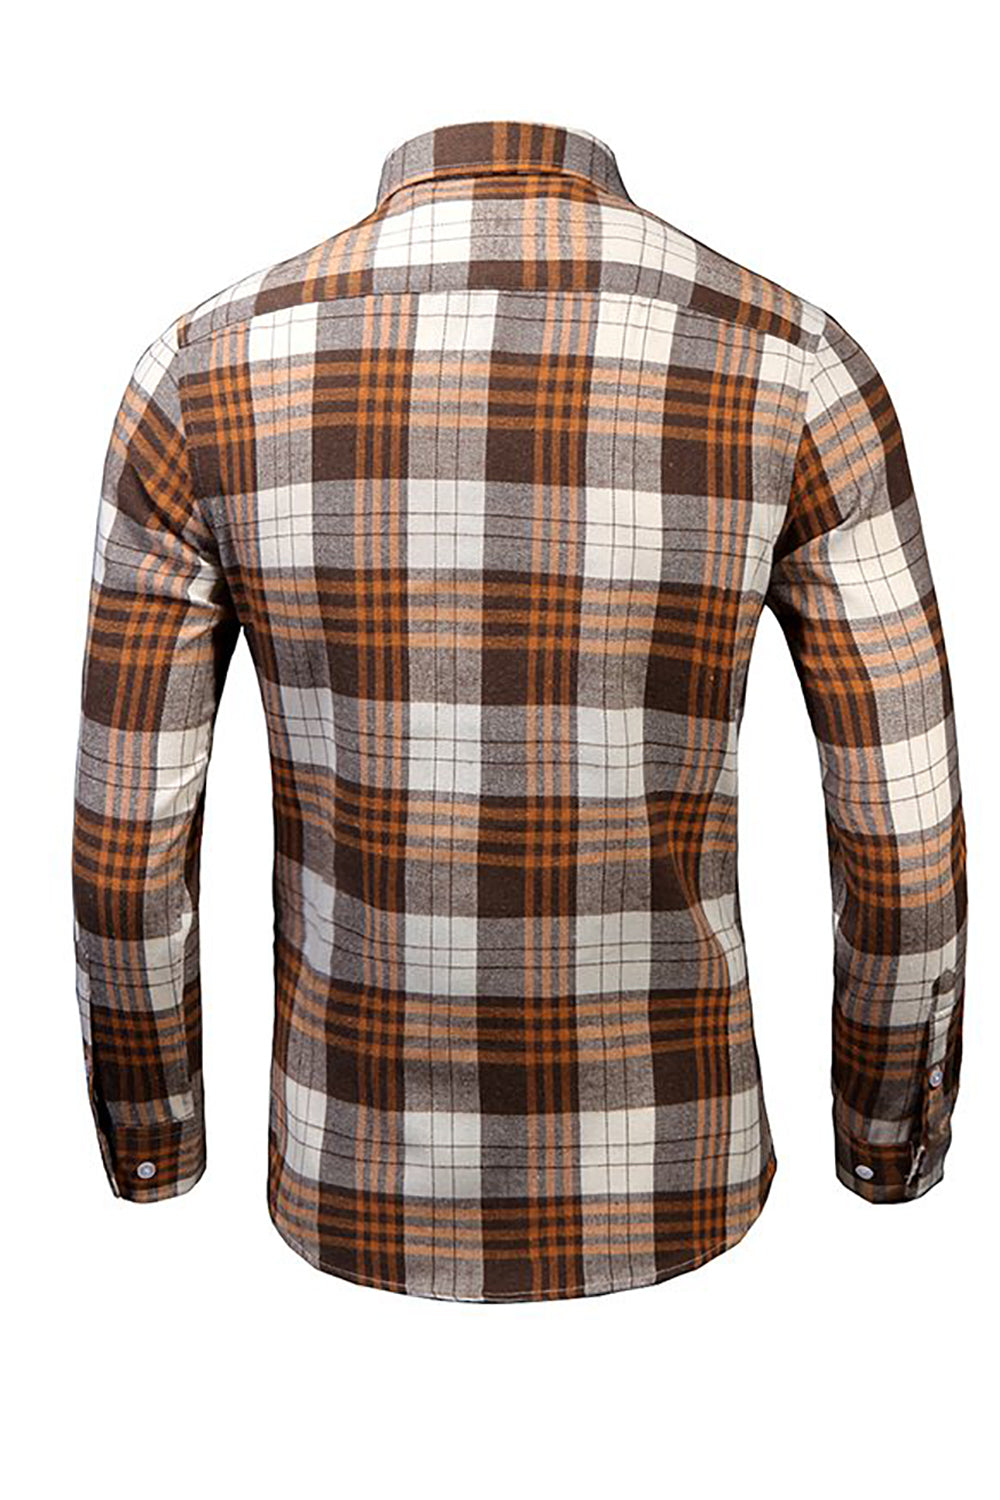 Brown Striped Plaid Plus Size Men's Shirt